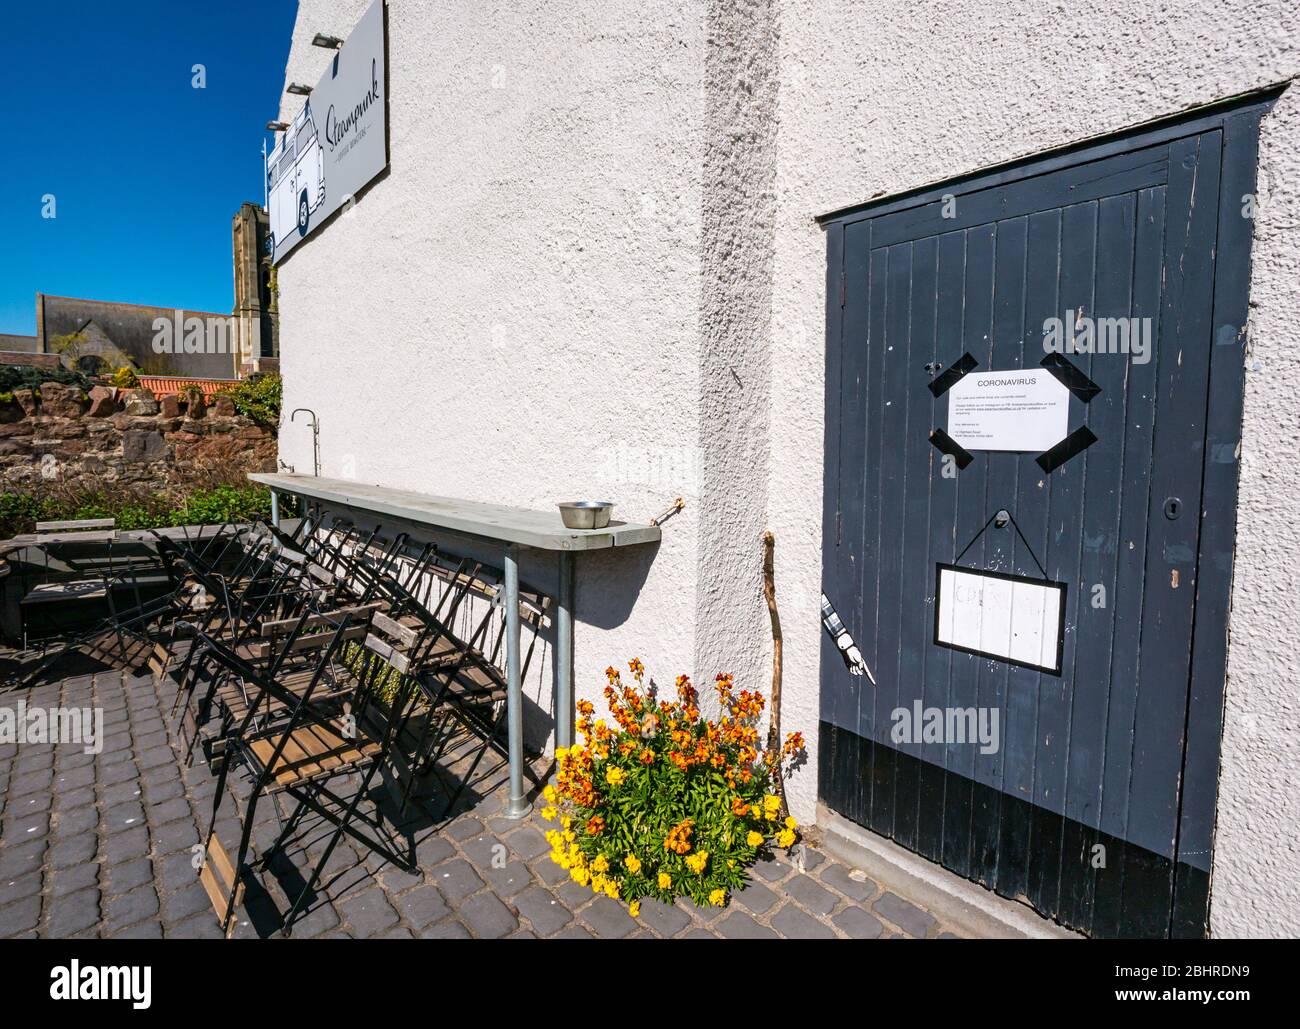 Steampunk cafe closed down due to Coronavirus pandemic with customer notice on door, North Berwick, East Lothian, Scotland, UK Stock Photo